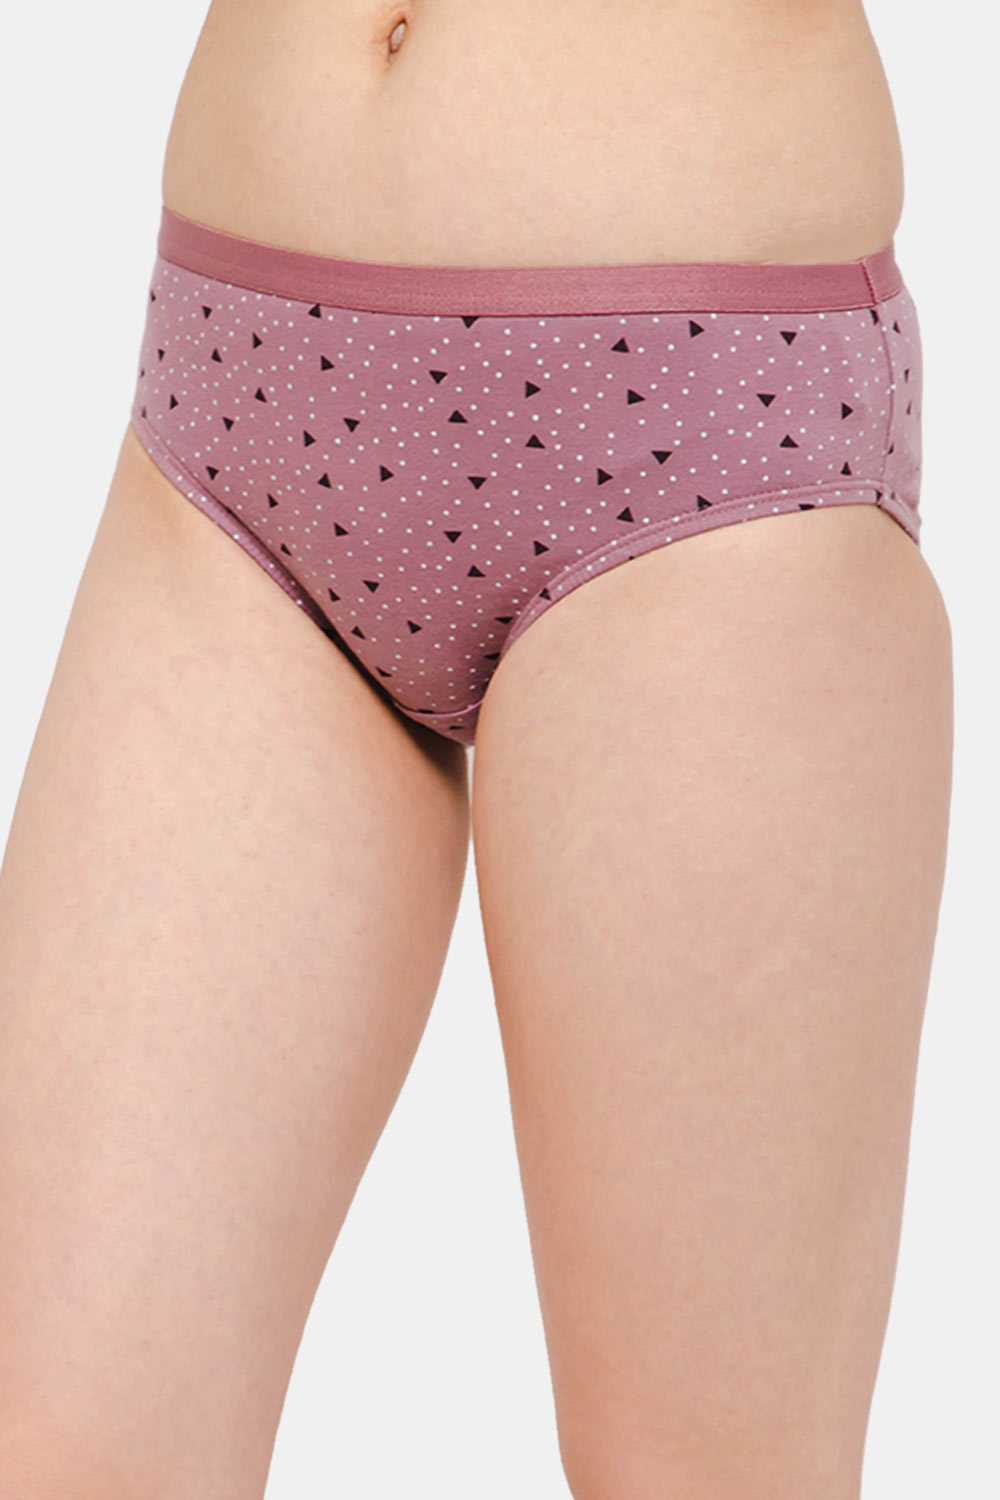 Girls' Print Pack Classic Underwear in 100% Cotton - Size Big Kids